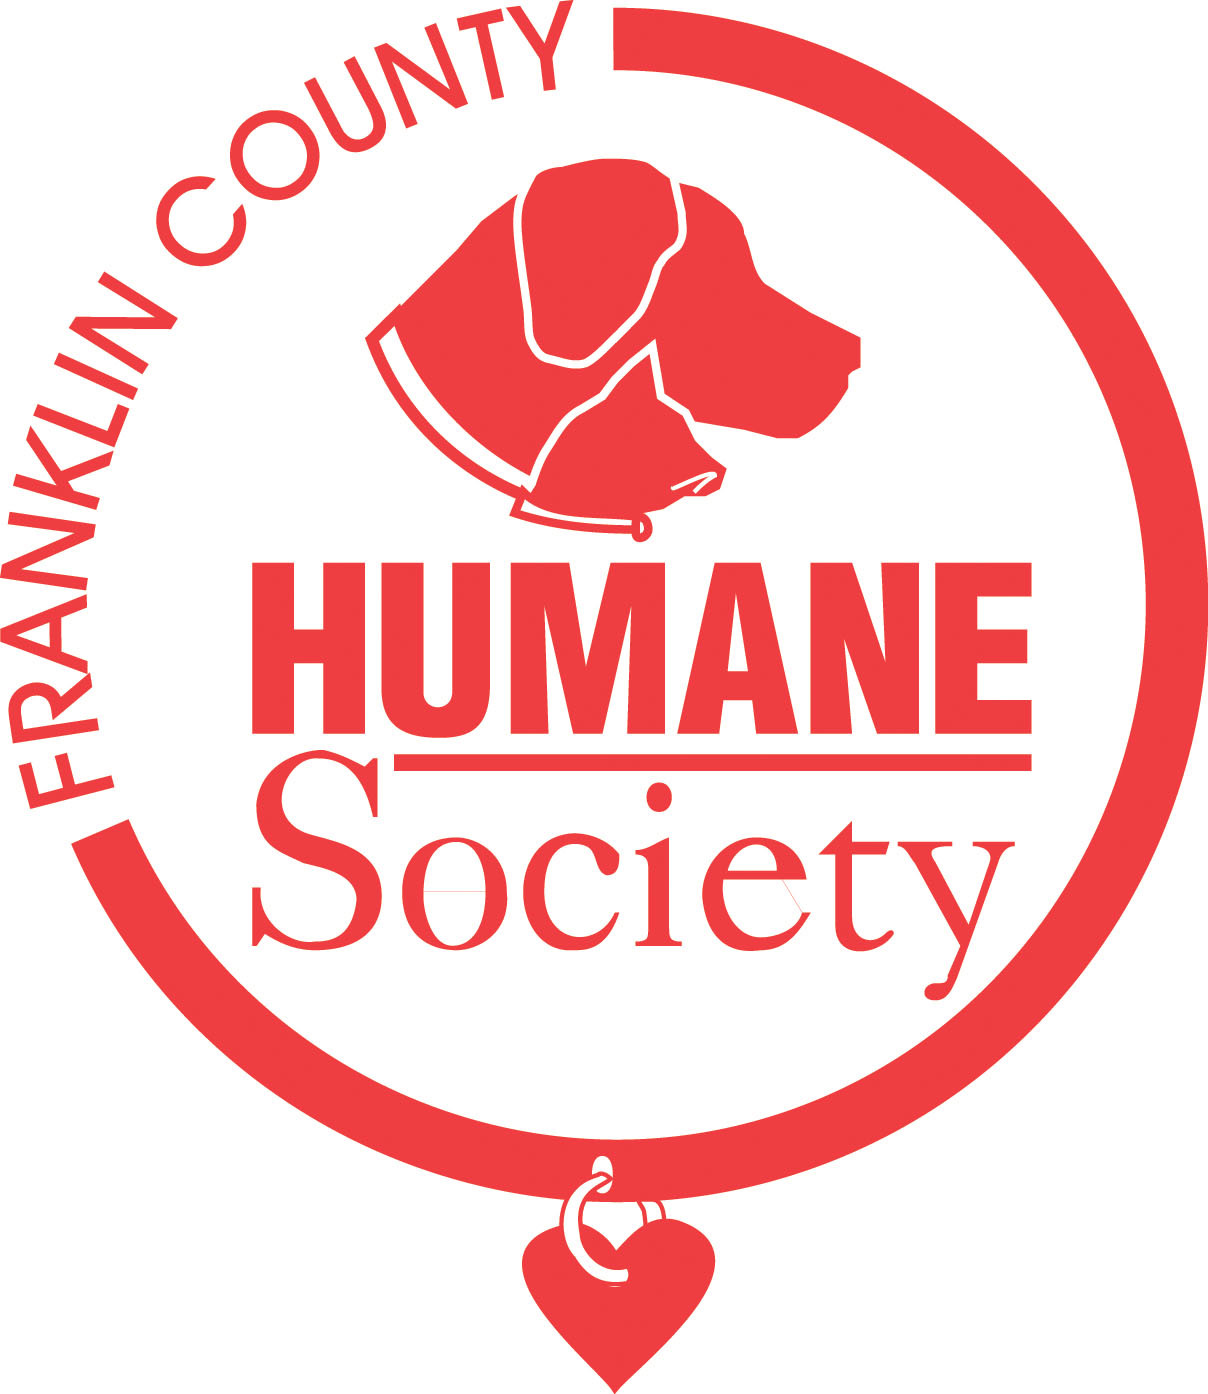 Franklin county humane society aldi hours baxter mn